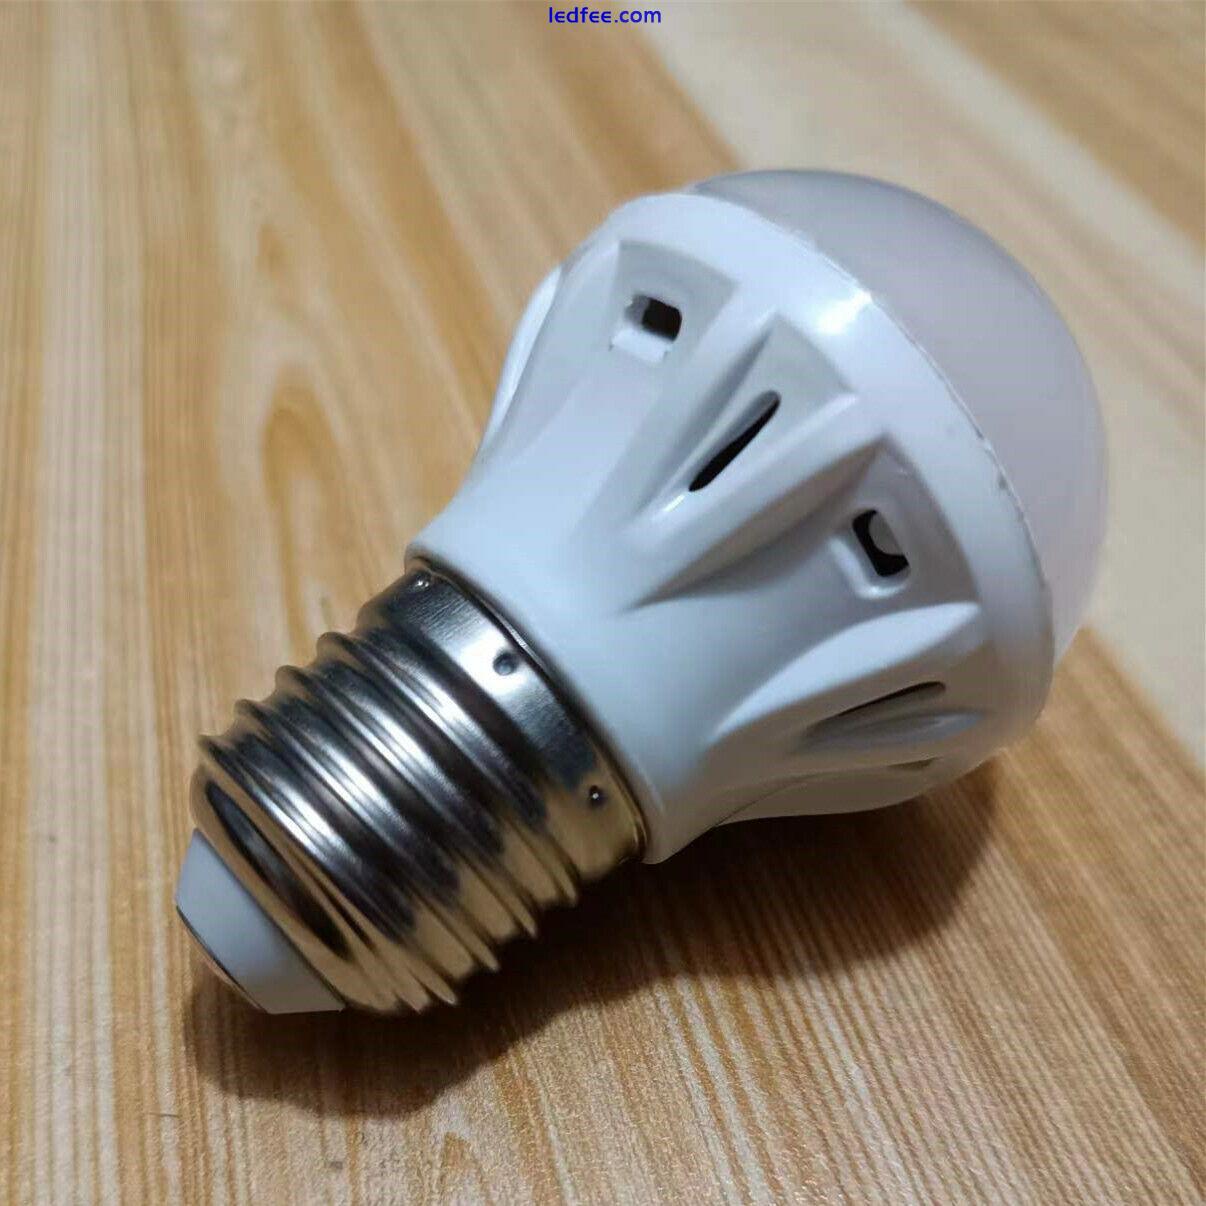 3W 5W 7W E27 Led Bulbs lights led light bulb volt Led to led Bedroom lamp DC12V 4 